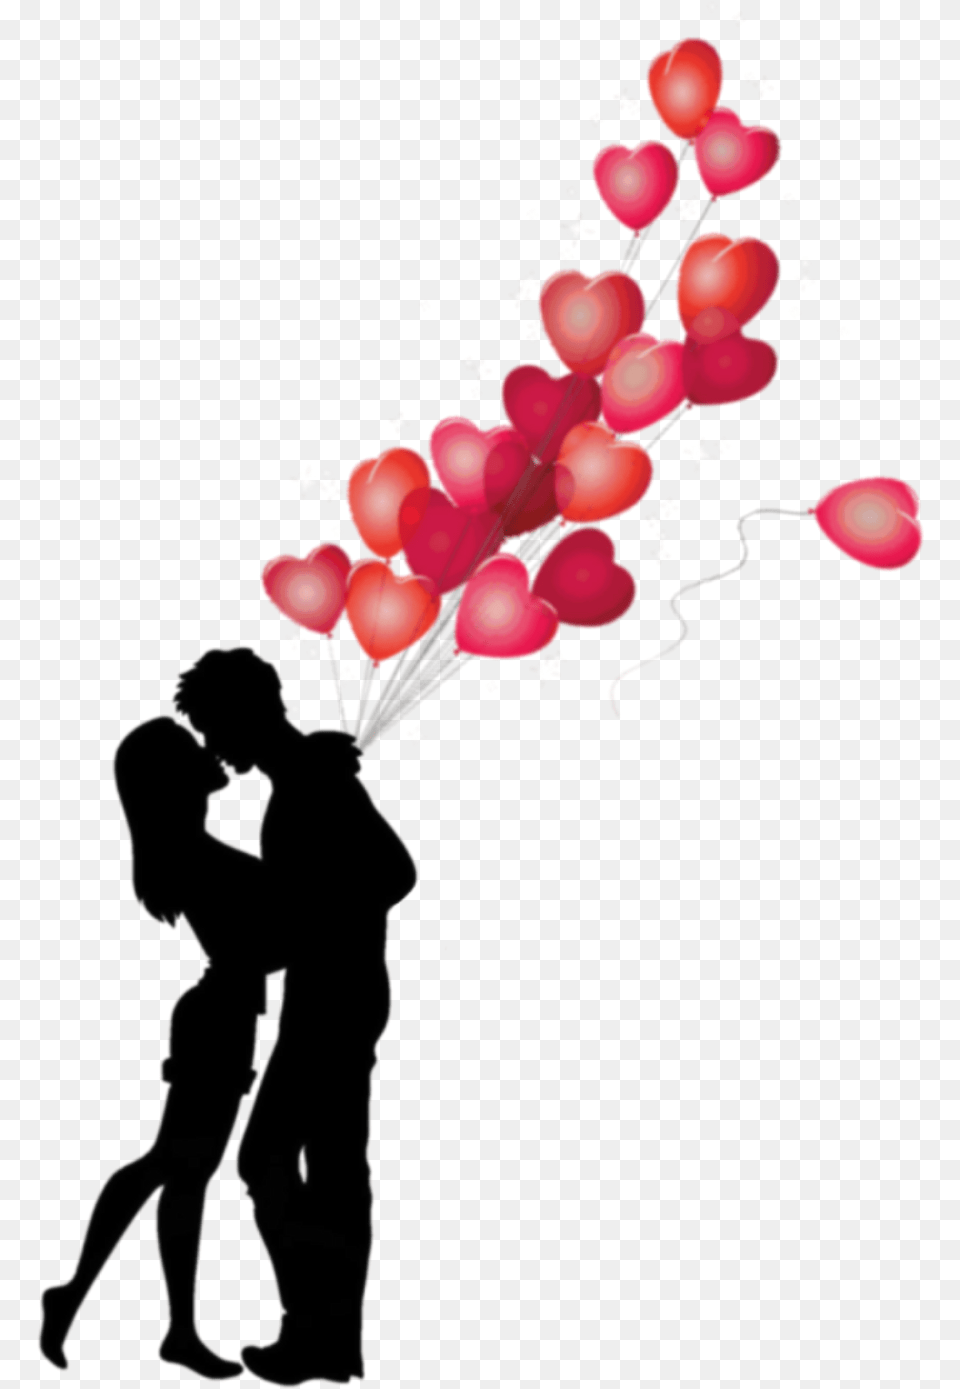 Love Hearts Silhouette Romantic Love Hd, Art, Balloon, Graphics, Flower Png